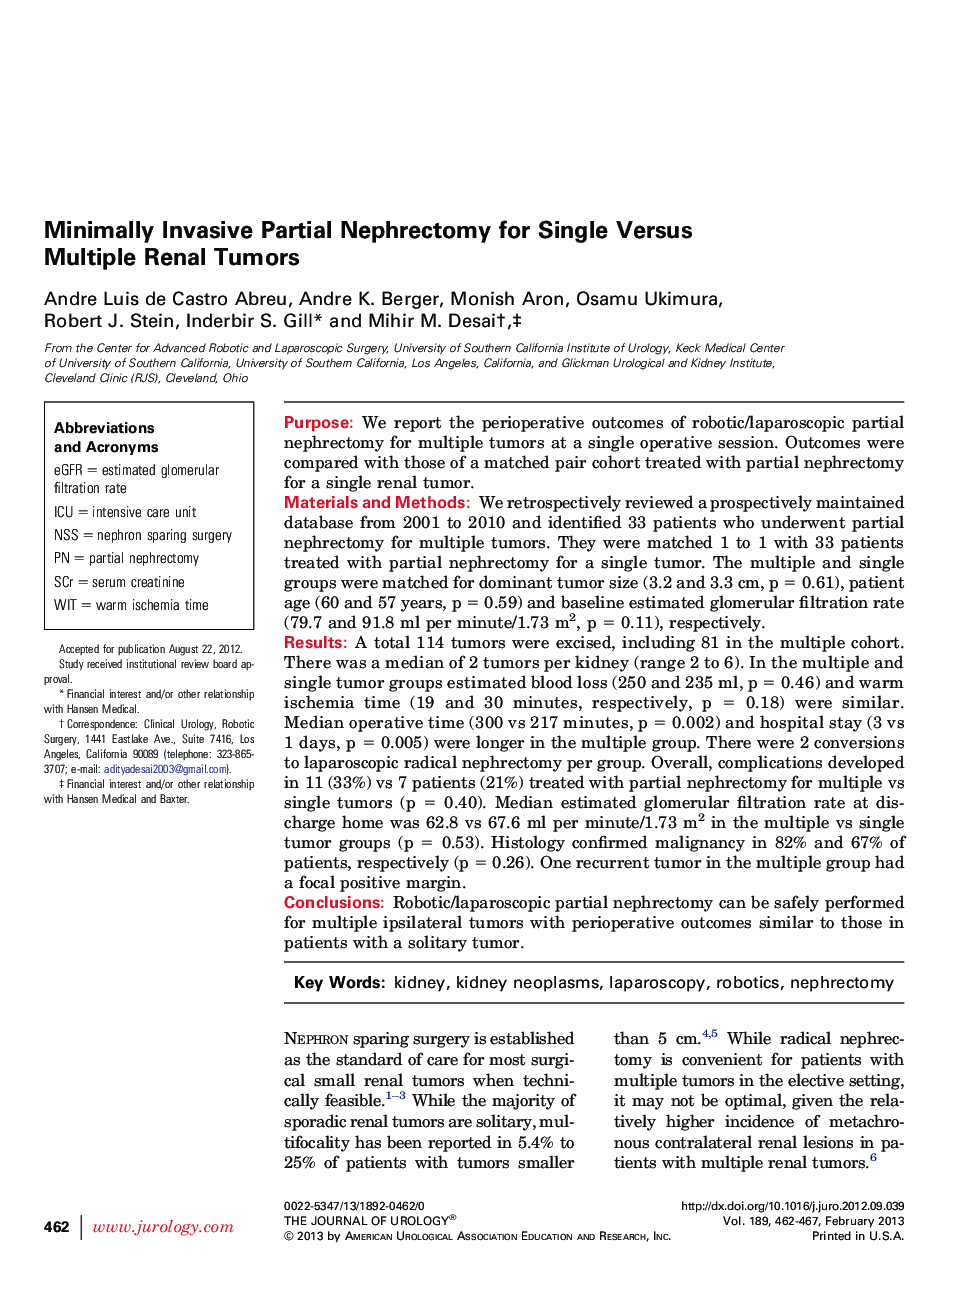 Minimally Invasive Partial Nephrectomy for Single Versus Multiple Renal Tumors 